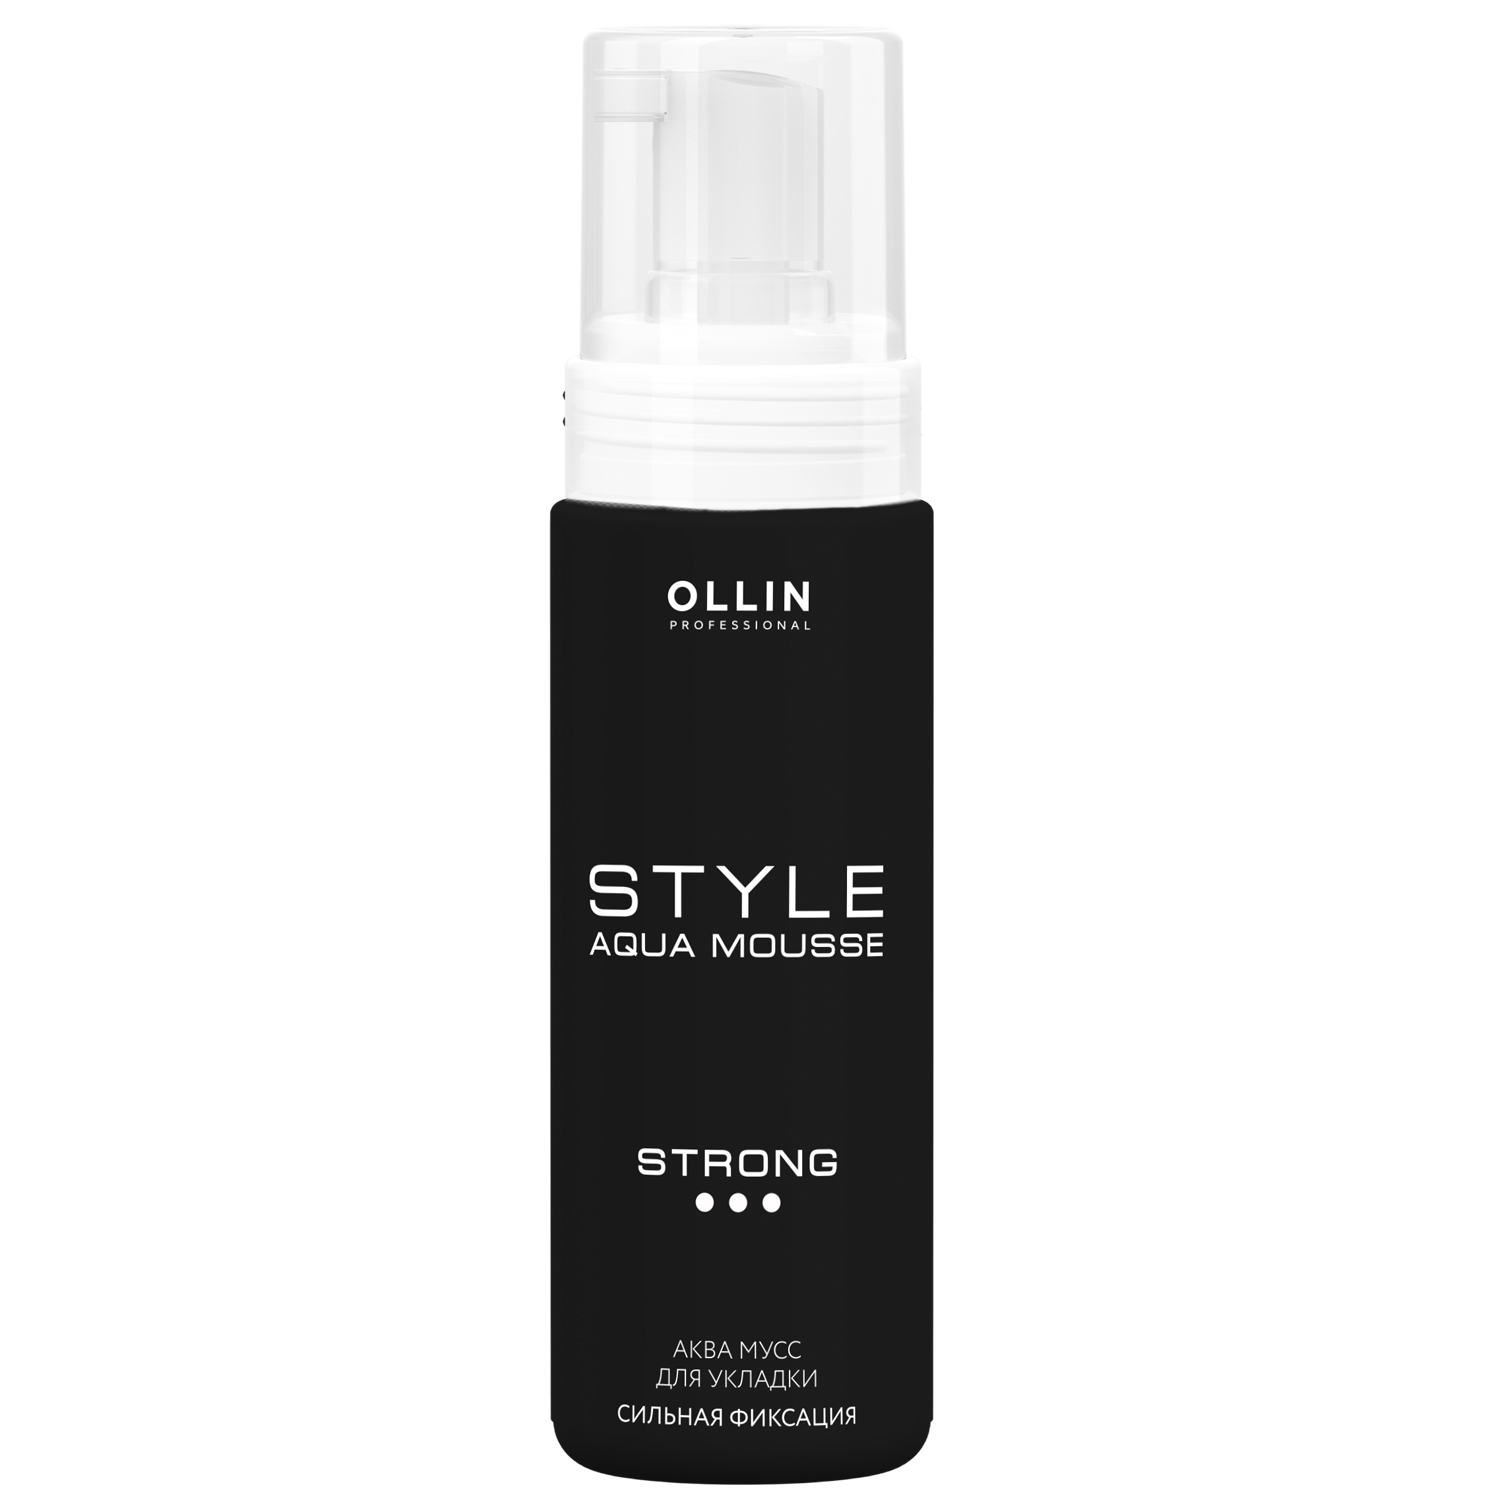 Ollin Professional Аквамусс для укладки сильной фиксации, 150 мл (Ollin Professional, Style)